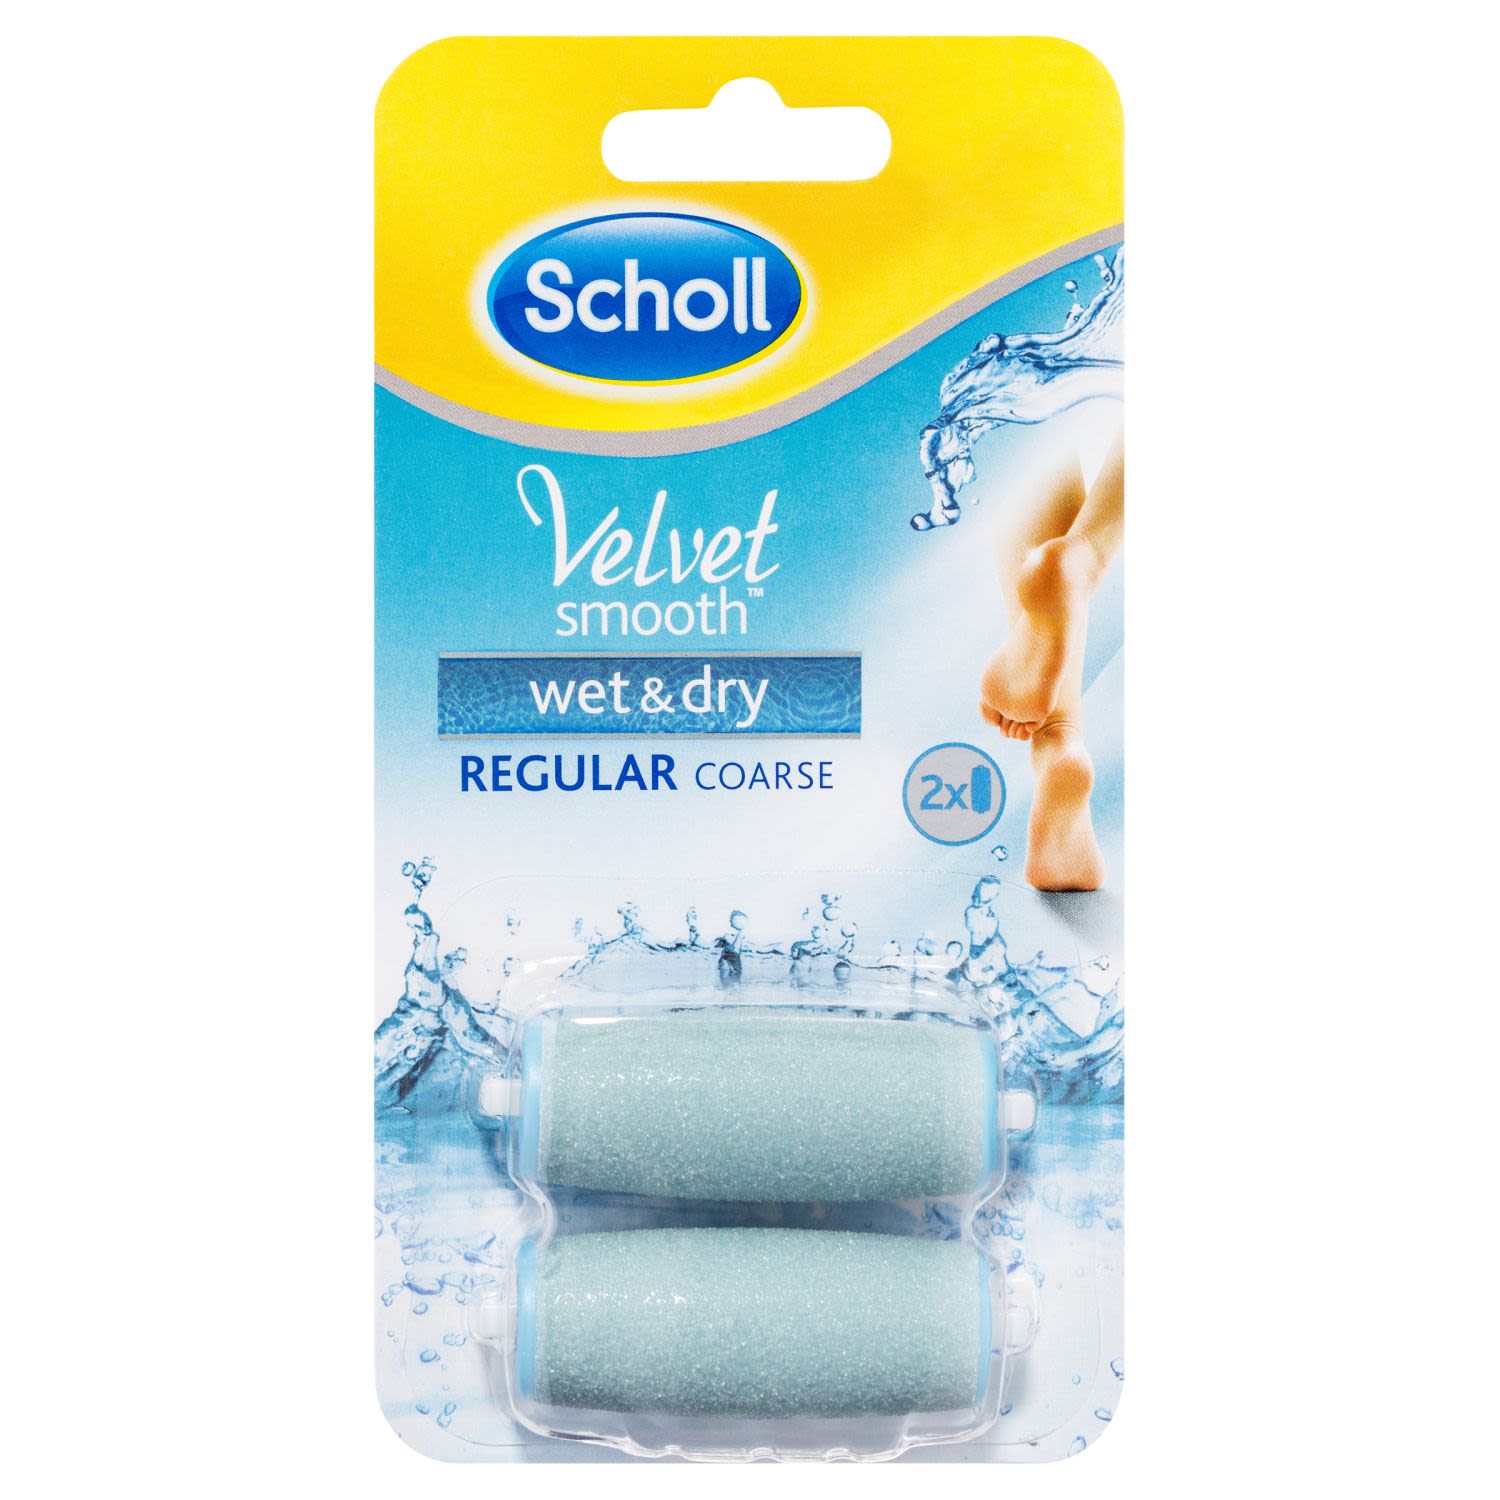 Scholl Velvet Smooth Wet & Dry Express Pedi Foot File Refill, 2 Each